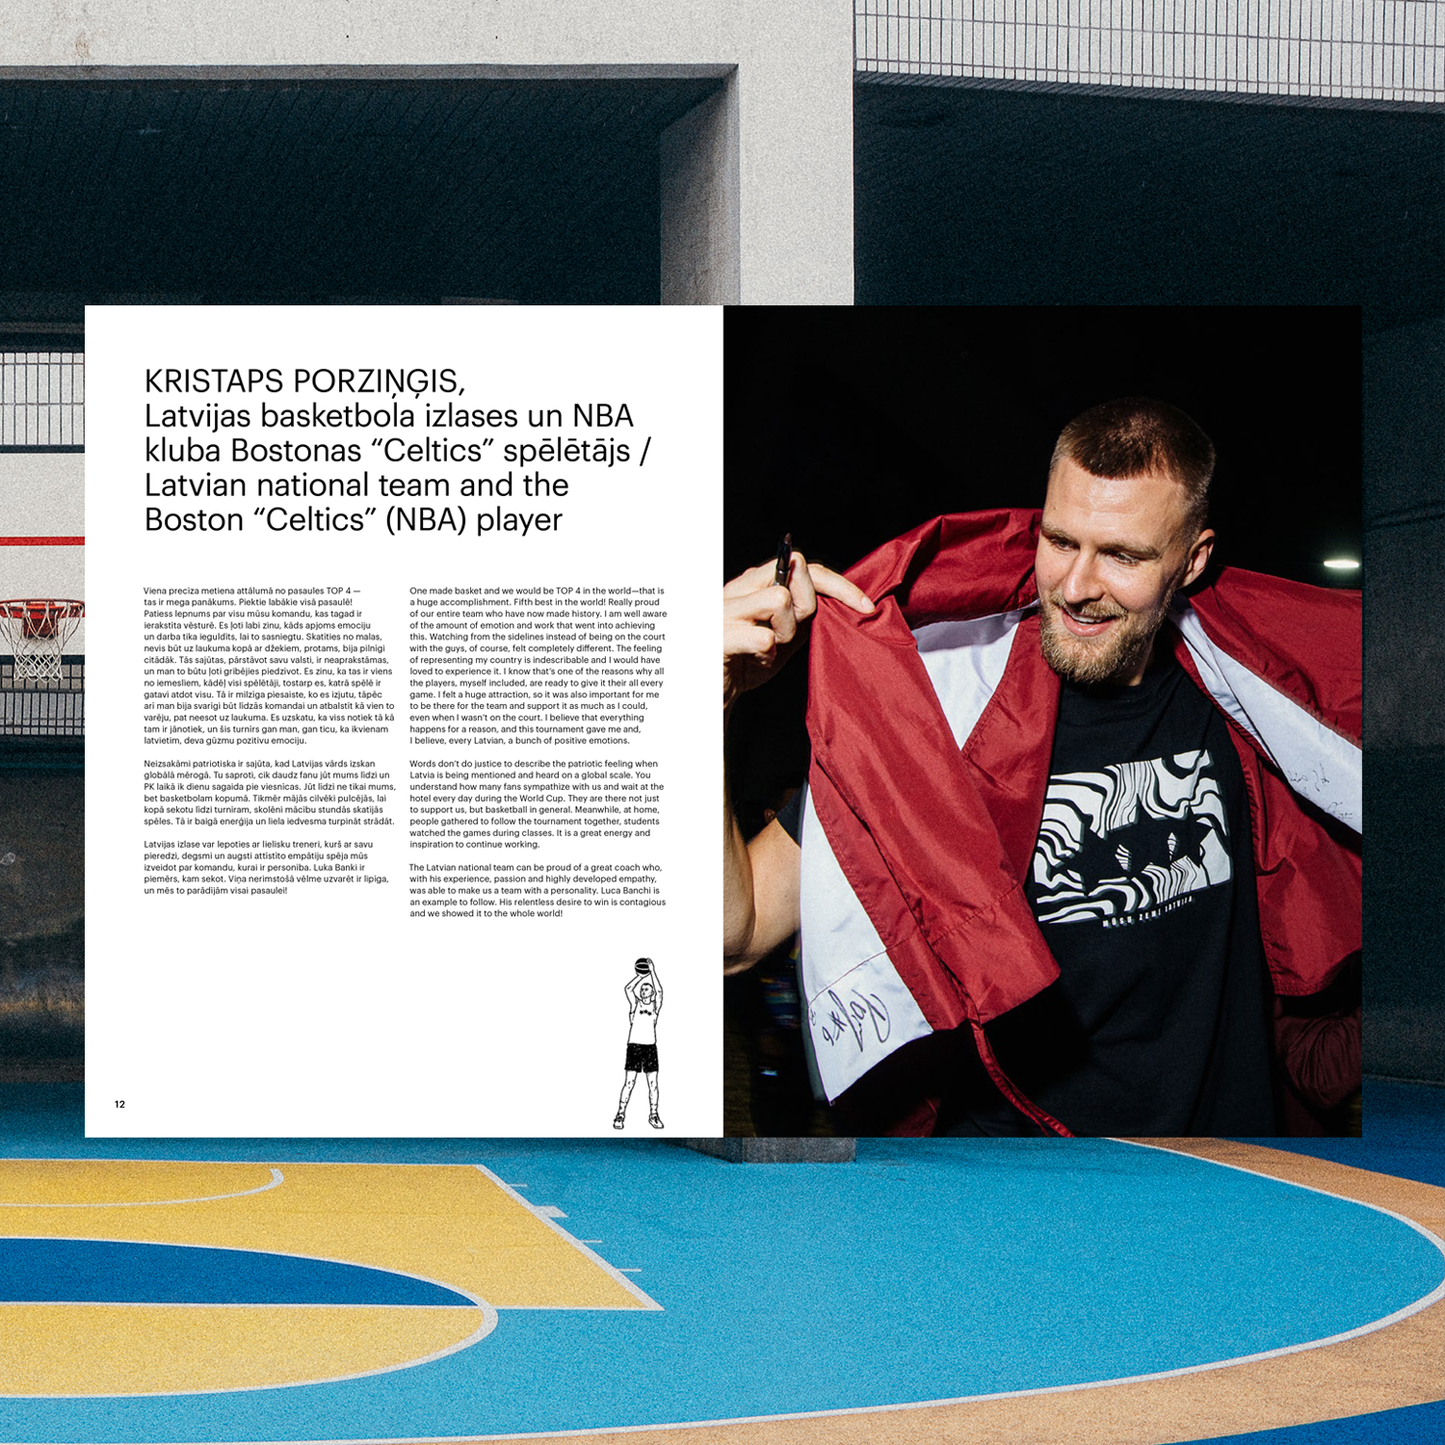 Fotogrāmata / Photo book "LATVIAAA. Basketball World Cup 2023"